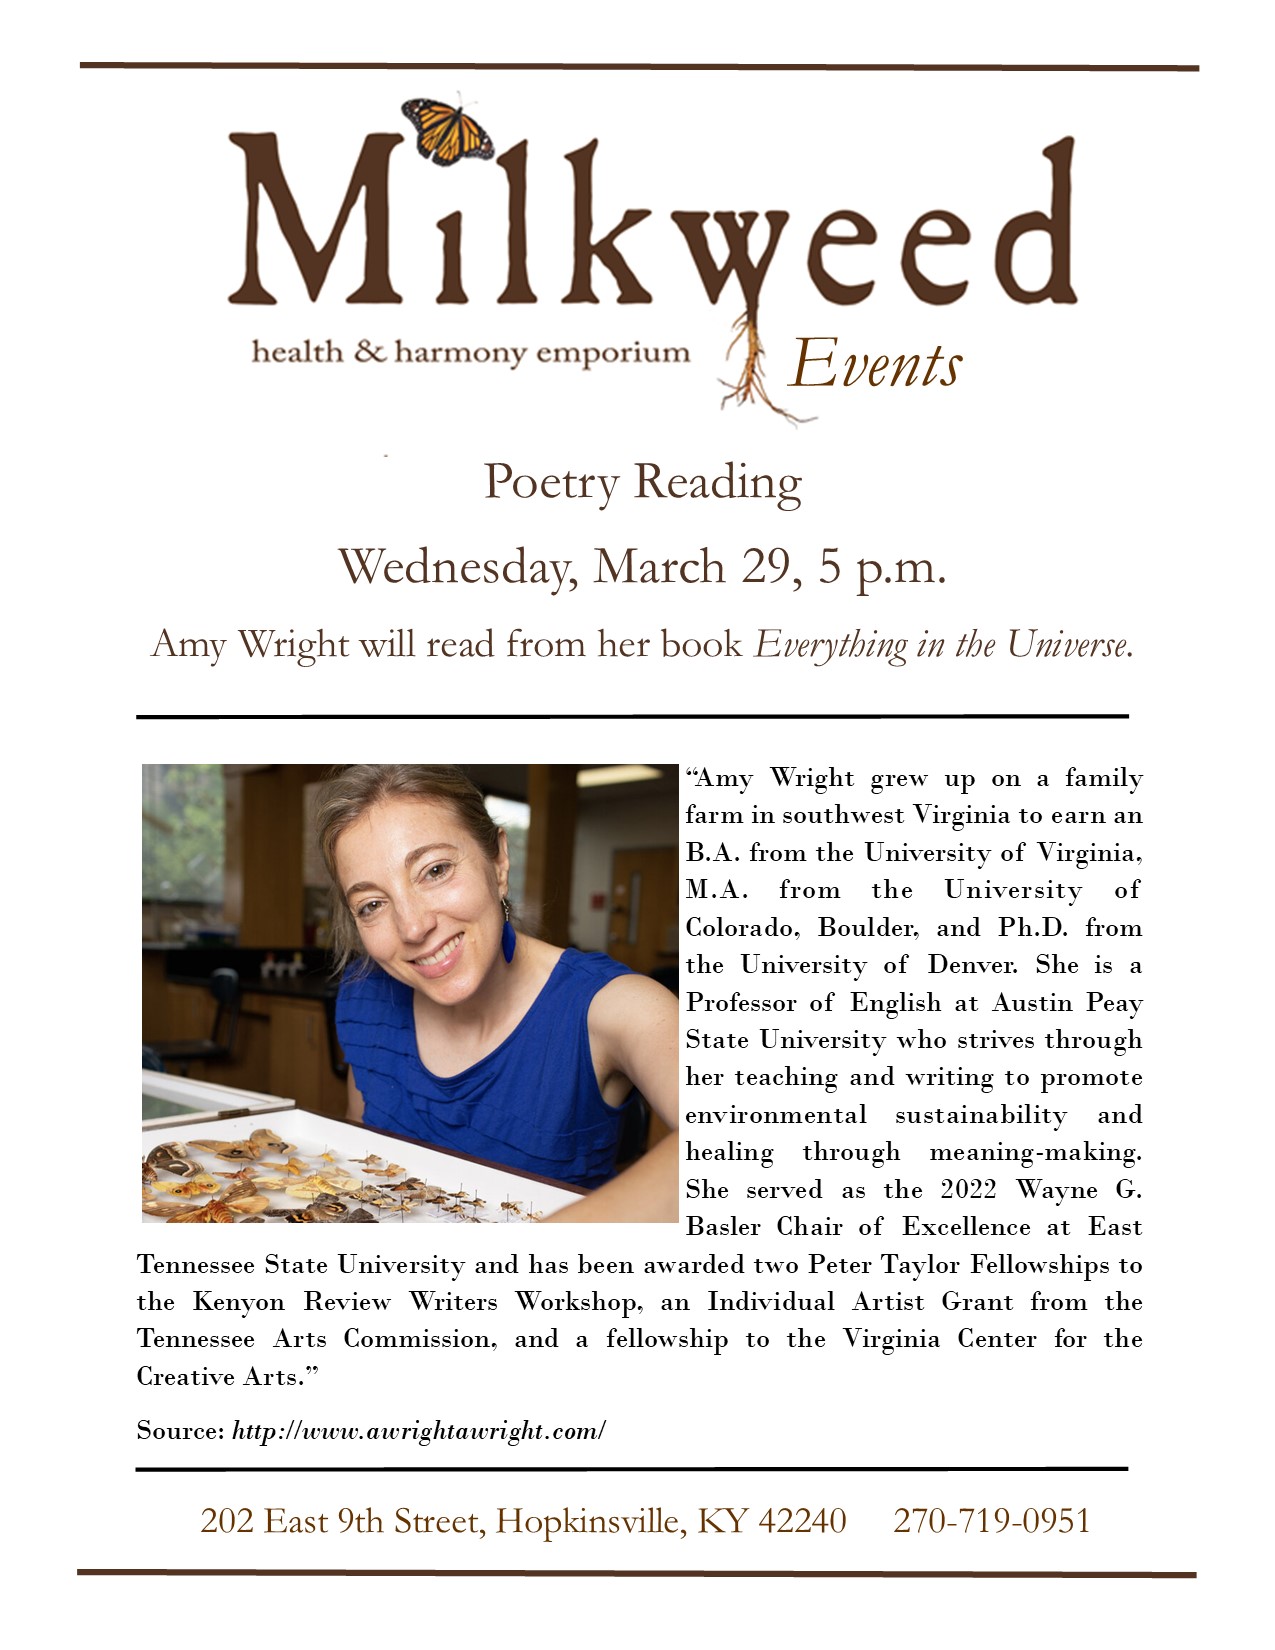 Poetry reading at Milkweed